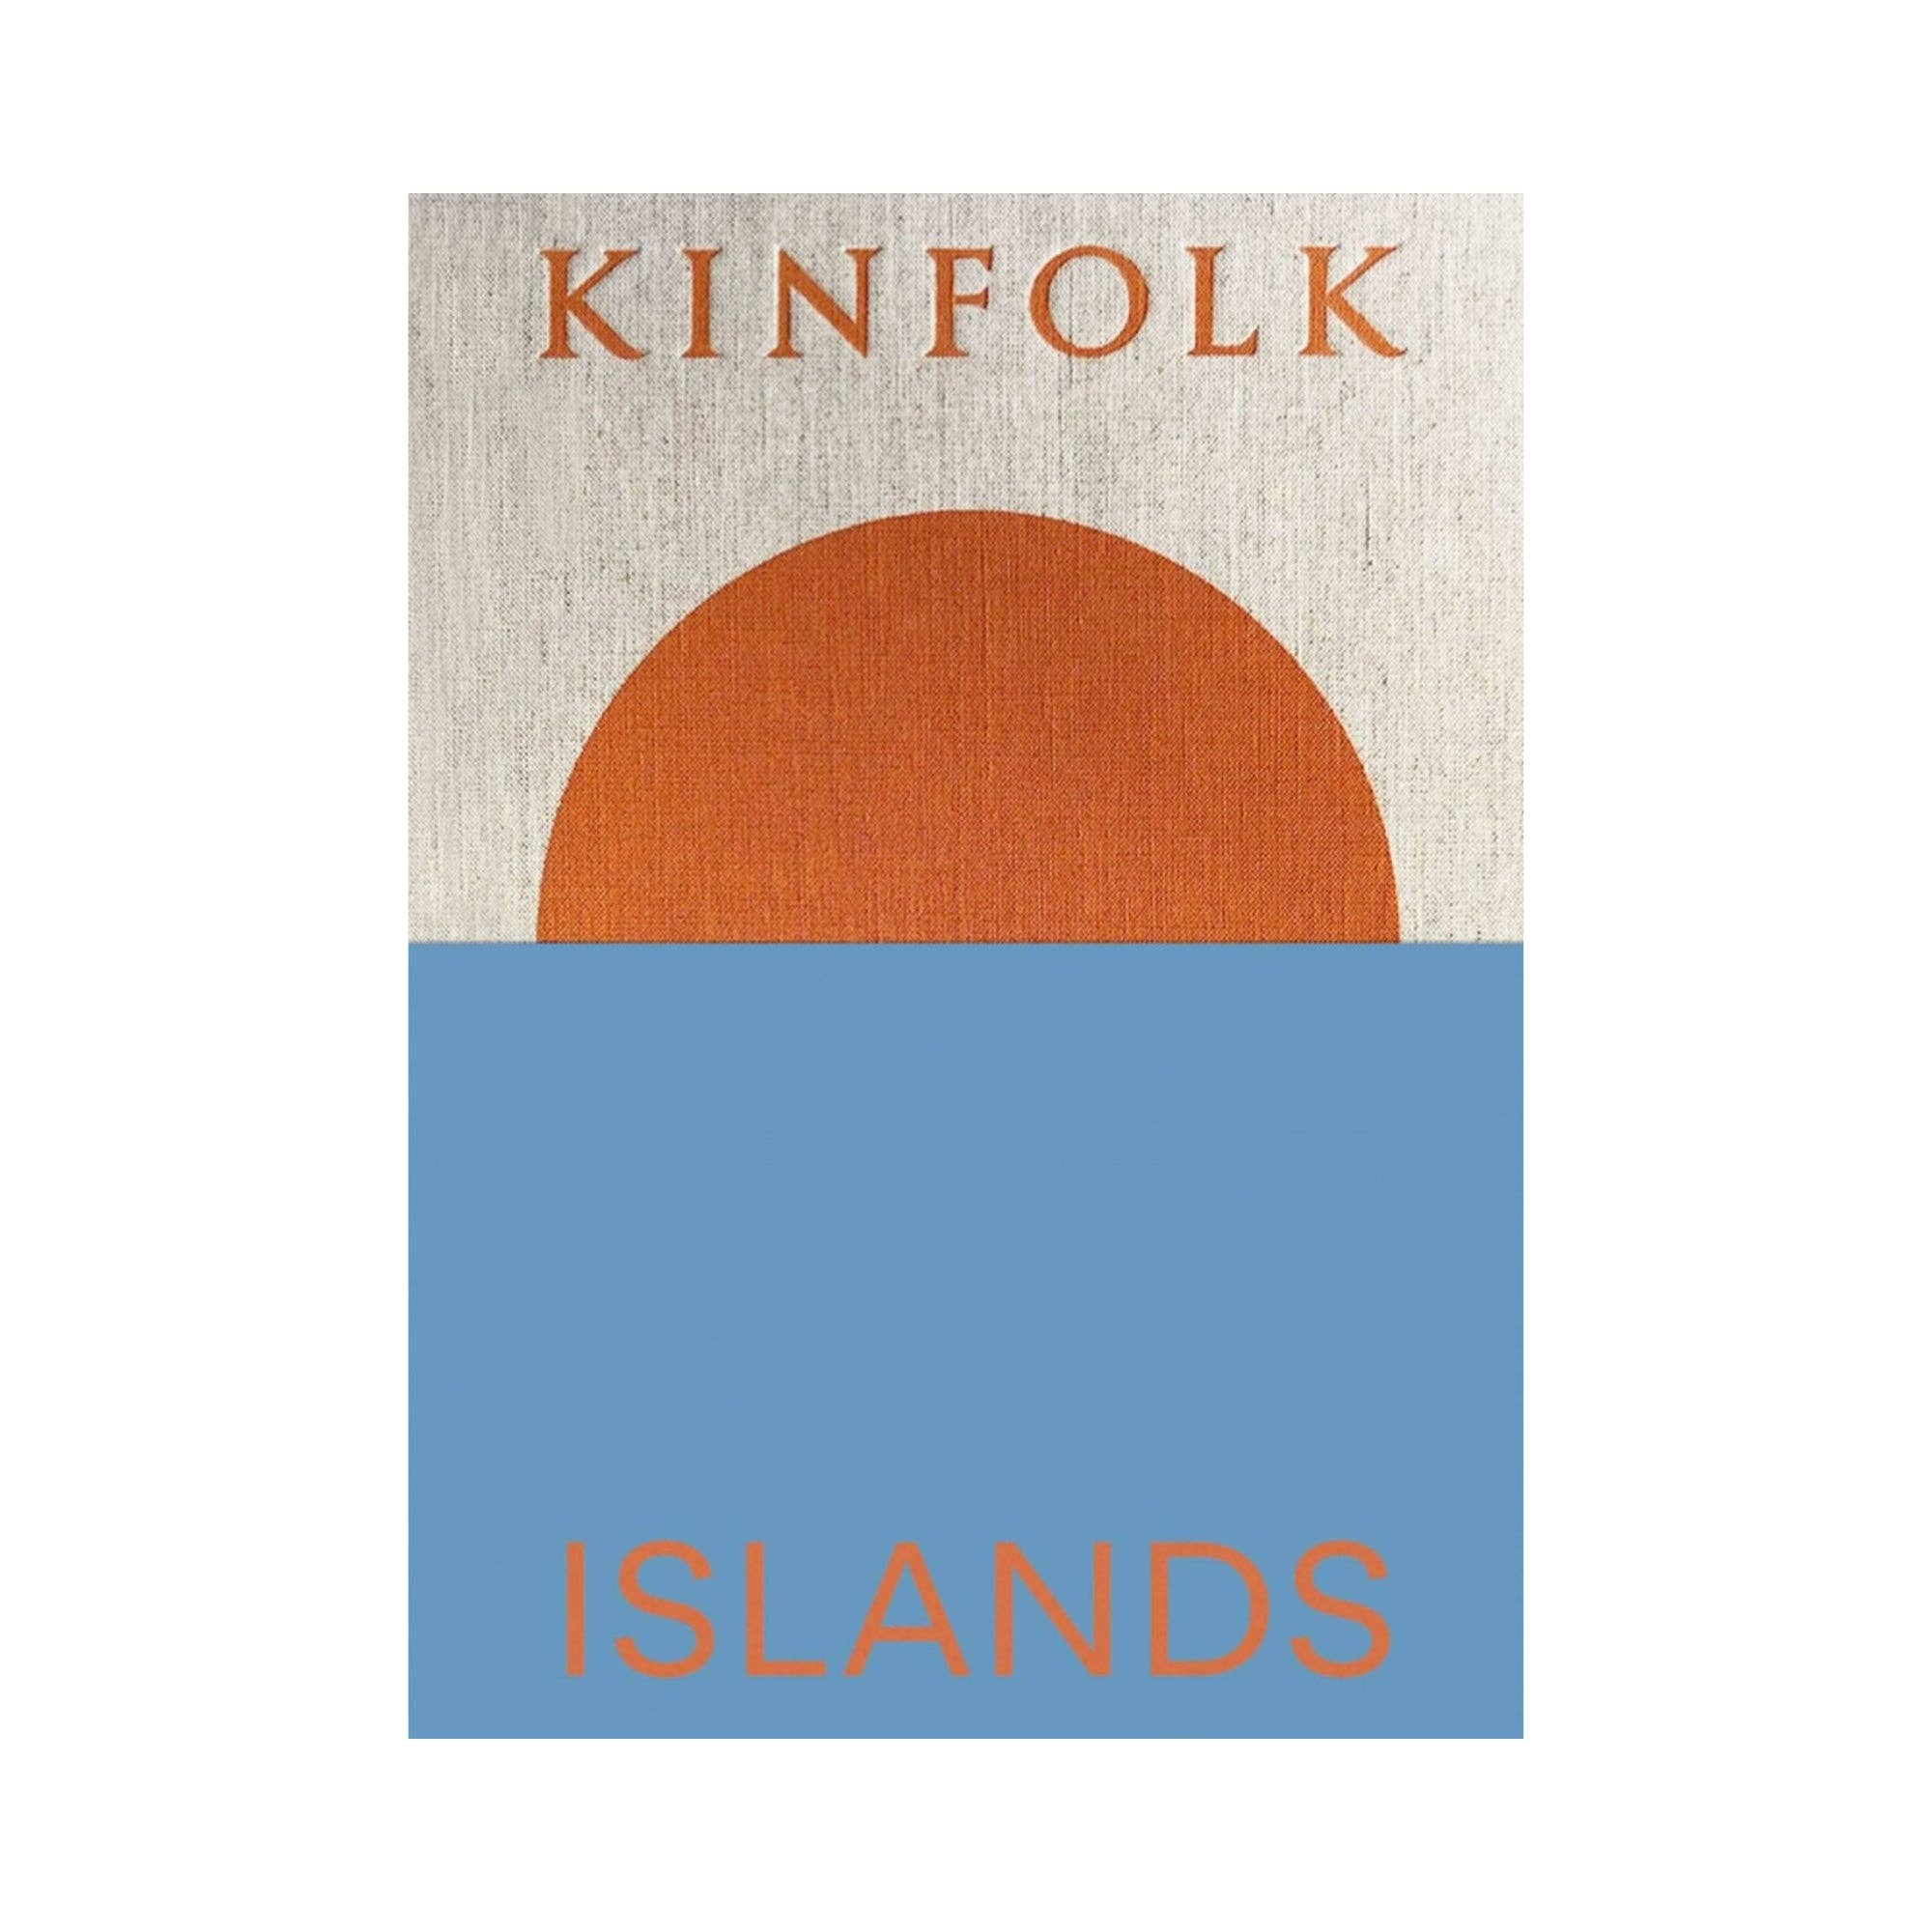 Kinfolk Islands by Claya